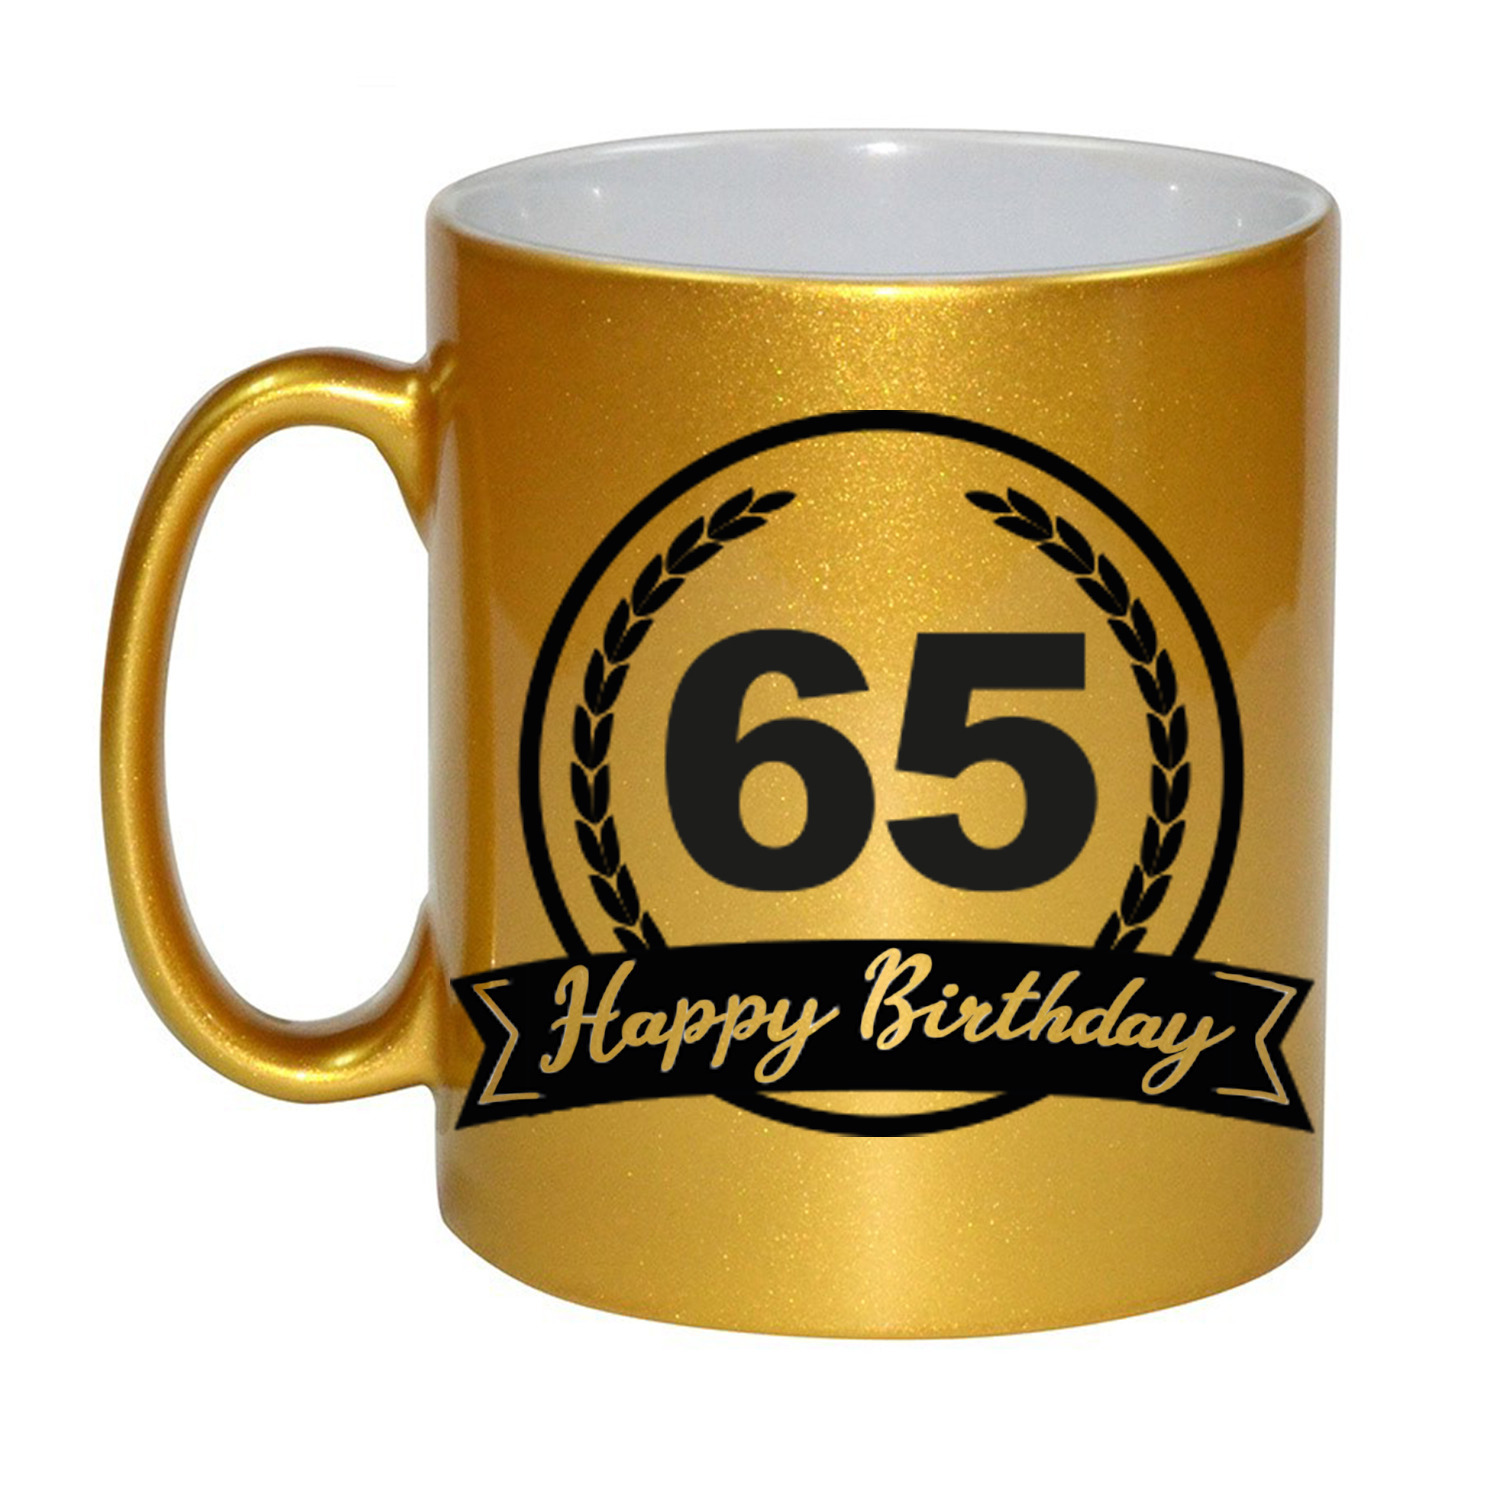 Happy Birthday 65 years gouden cadeau mok / beker met wimpel 330 ml